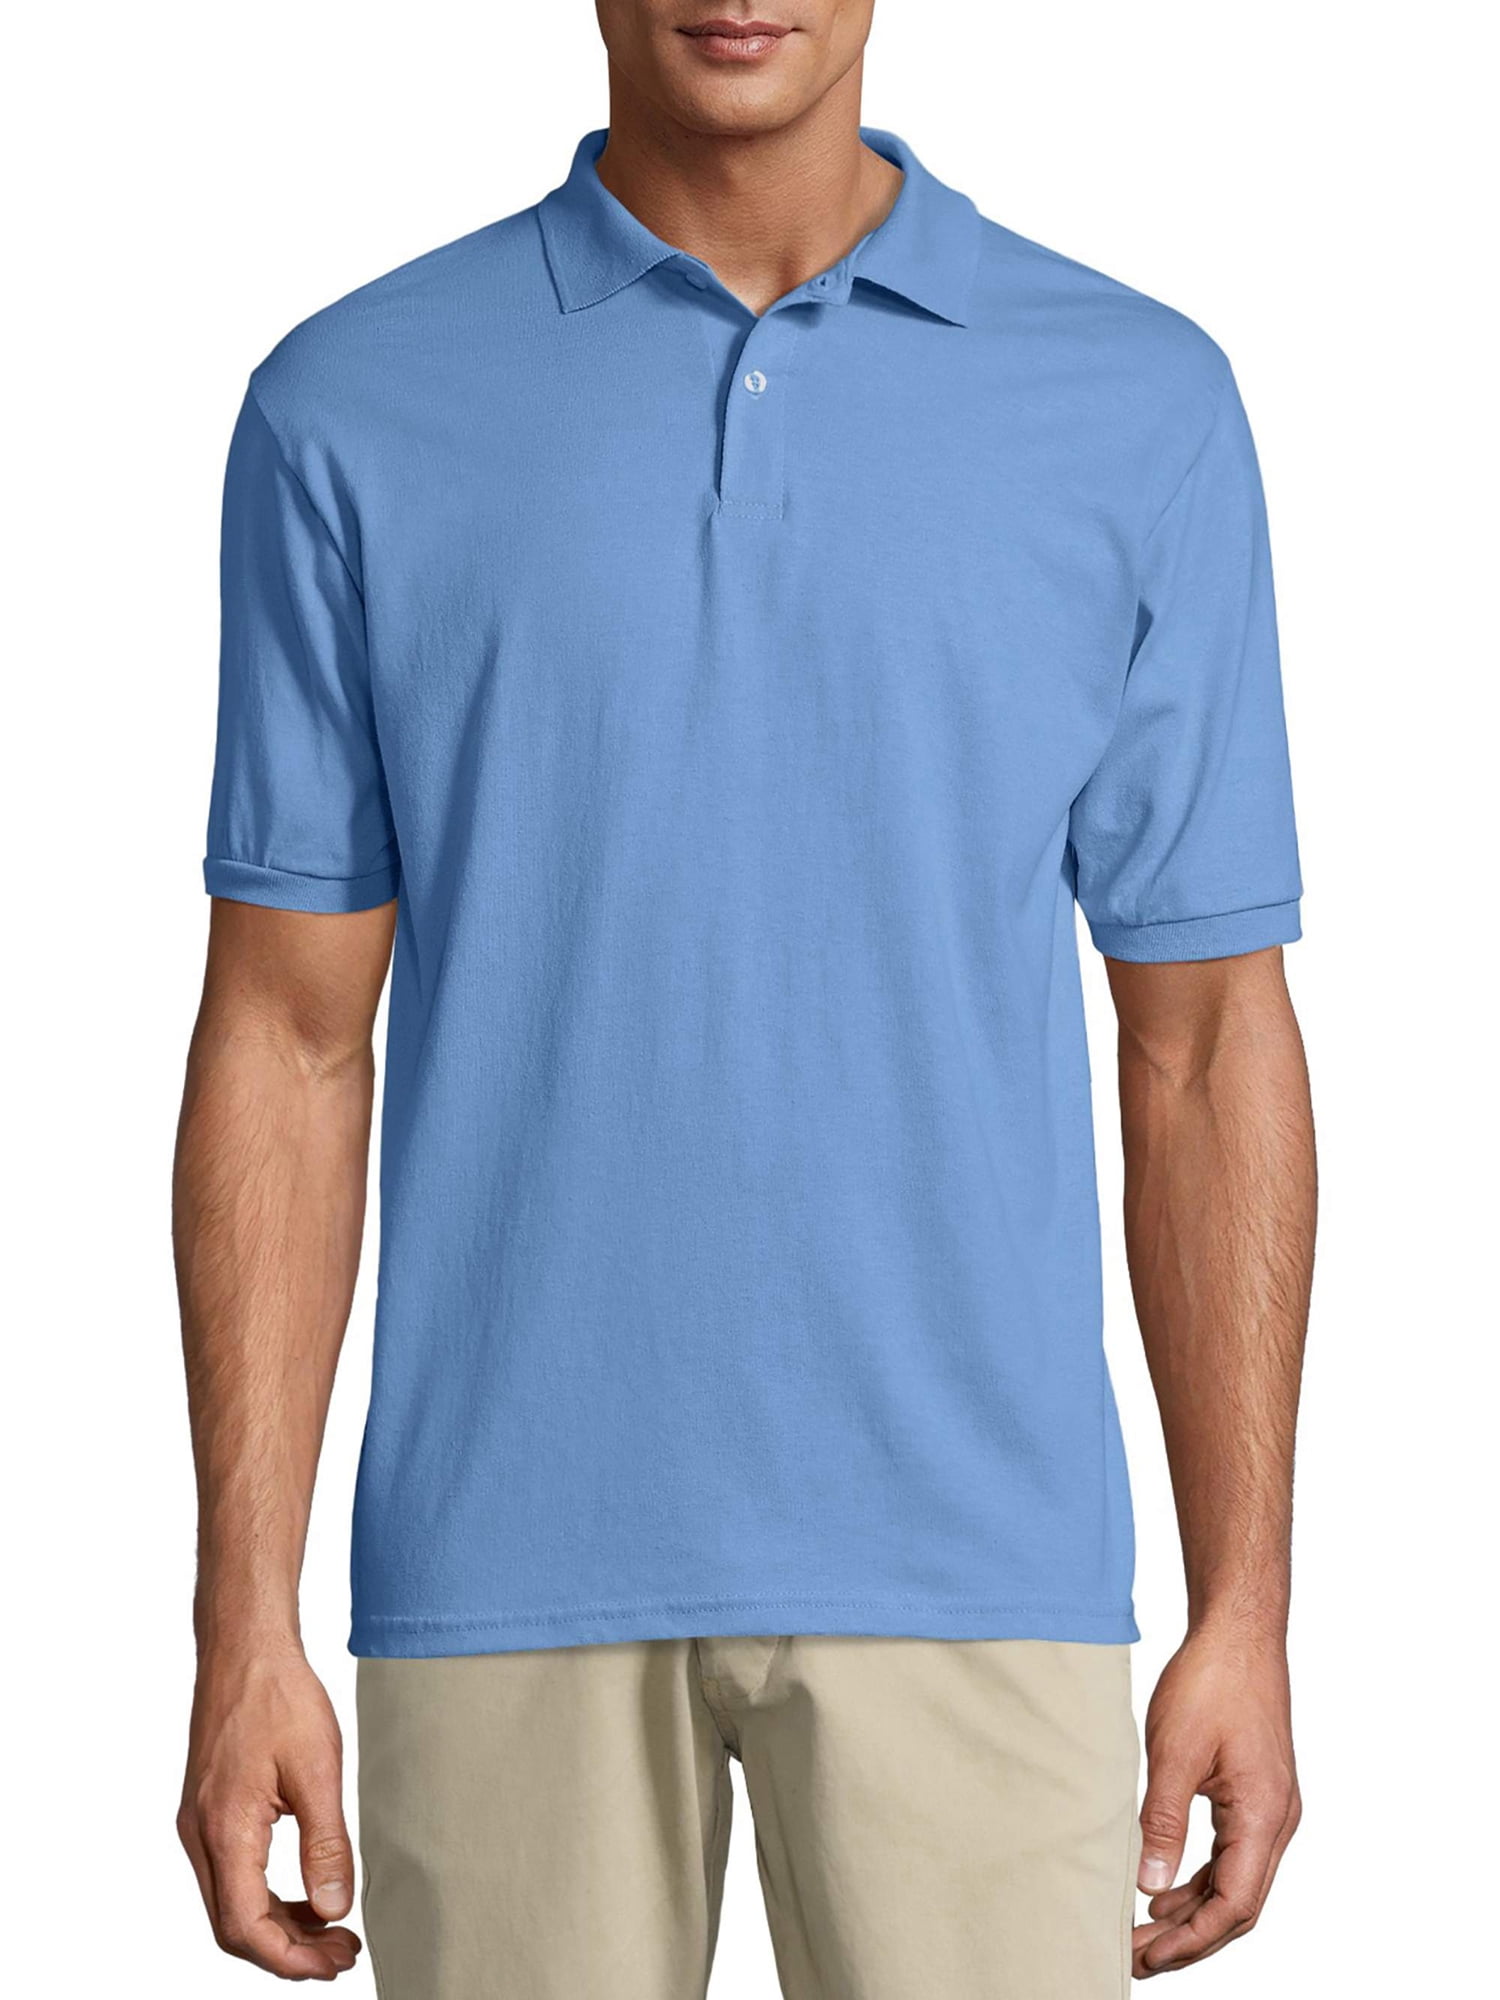 Hanes Men's Ecosmart Jersey Polo Shirt 